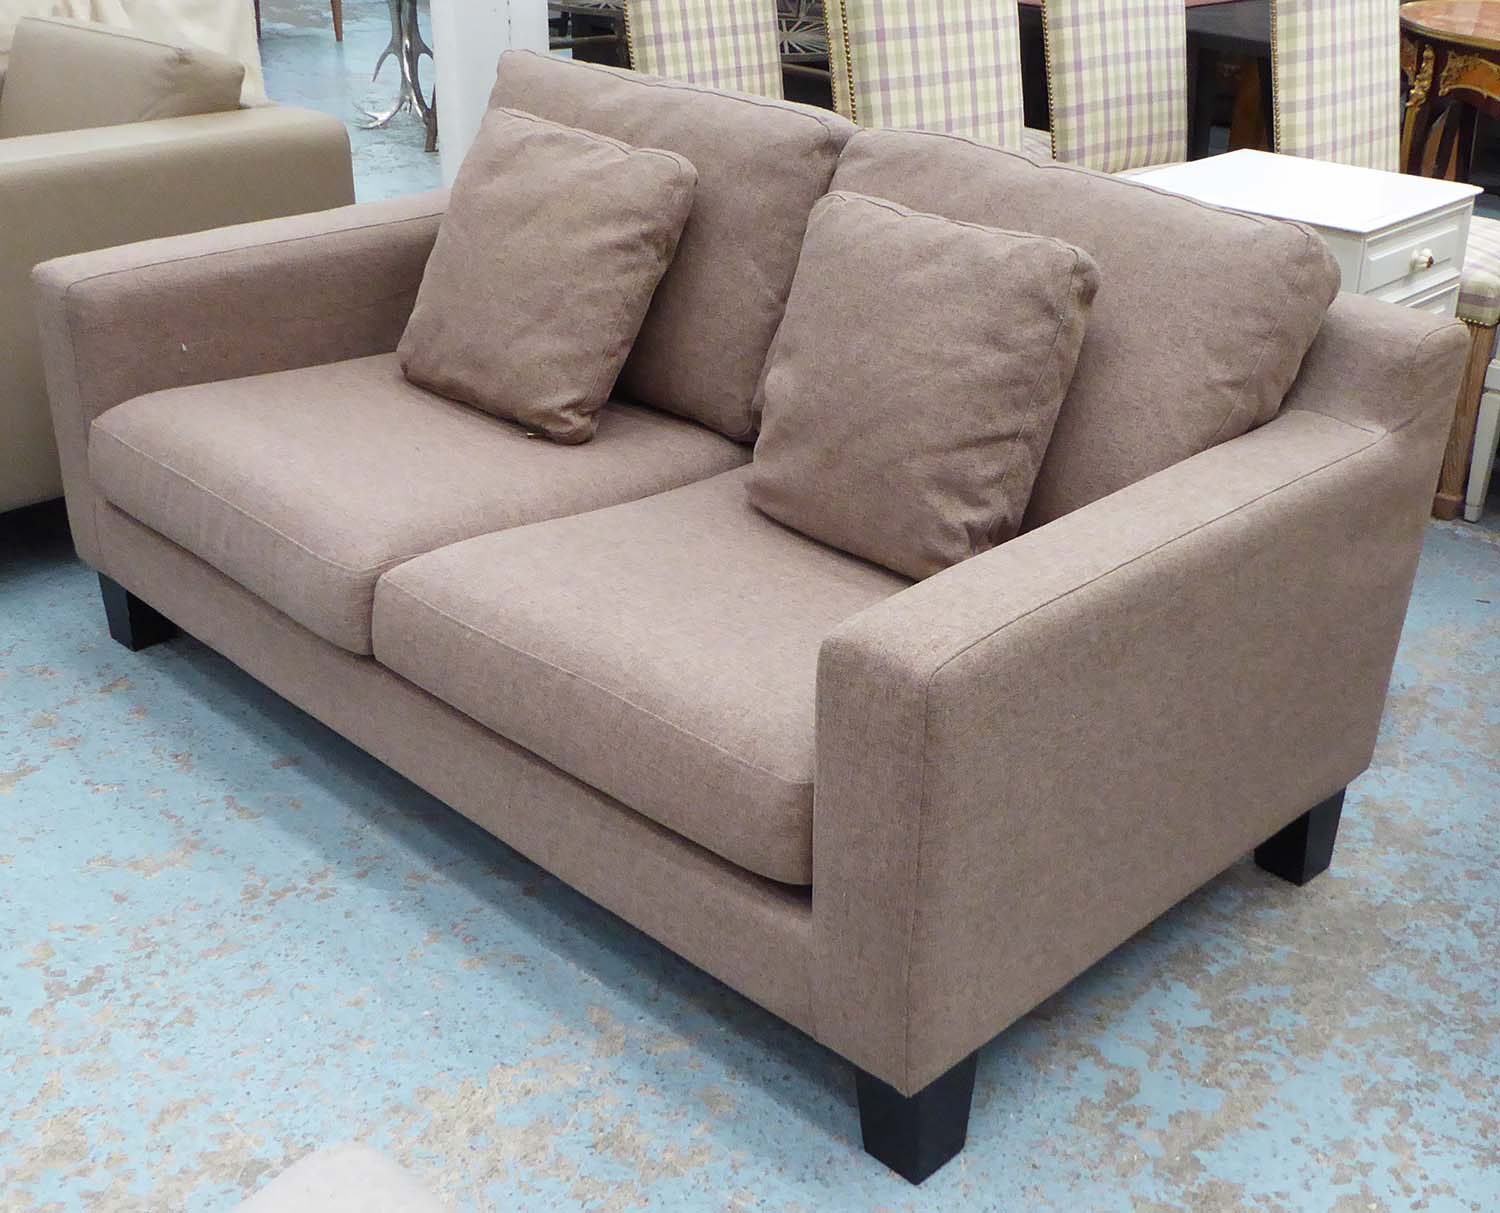 dwell sofa bed ebay